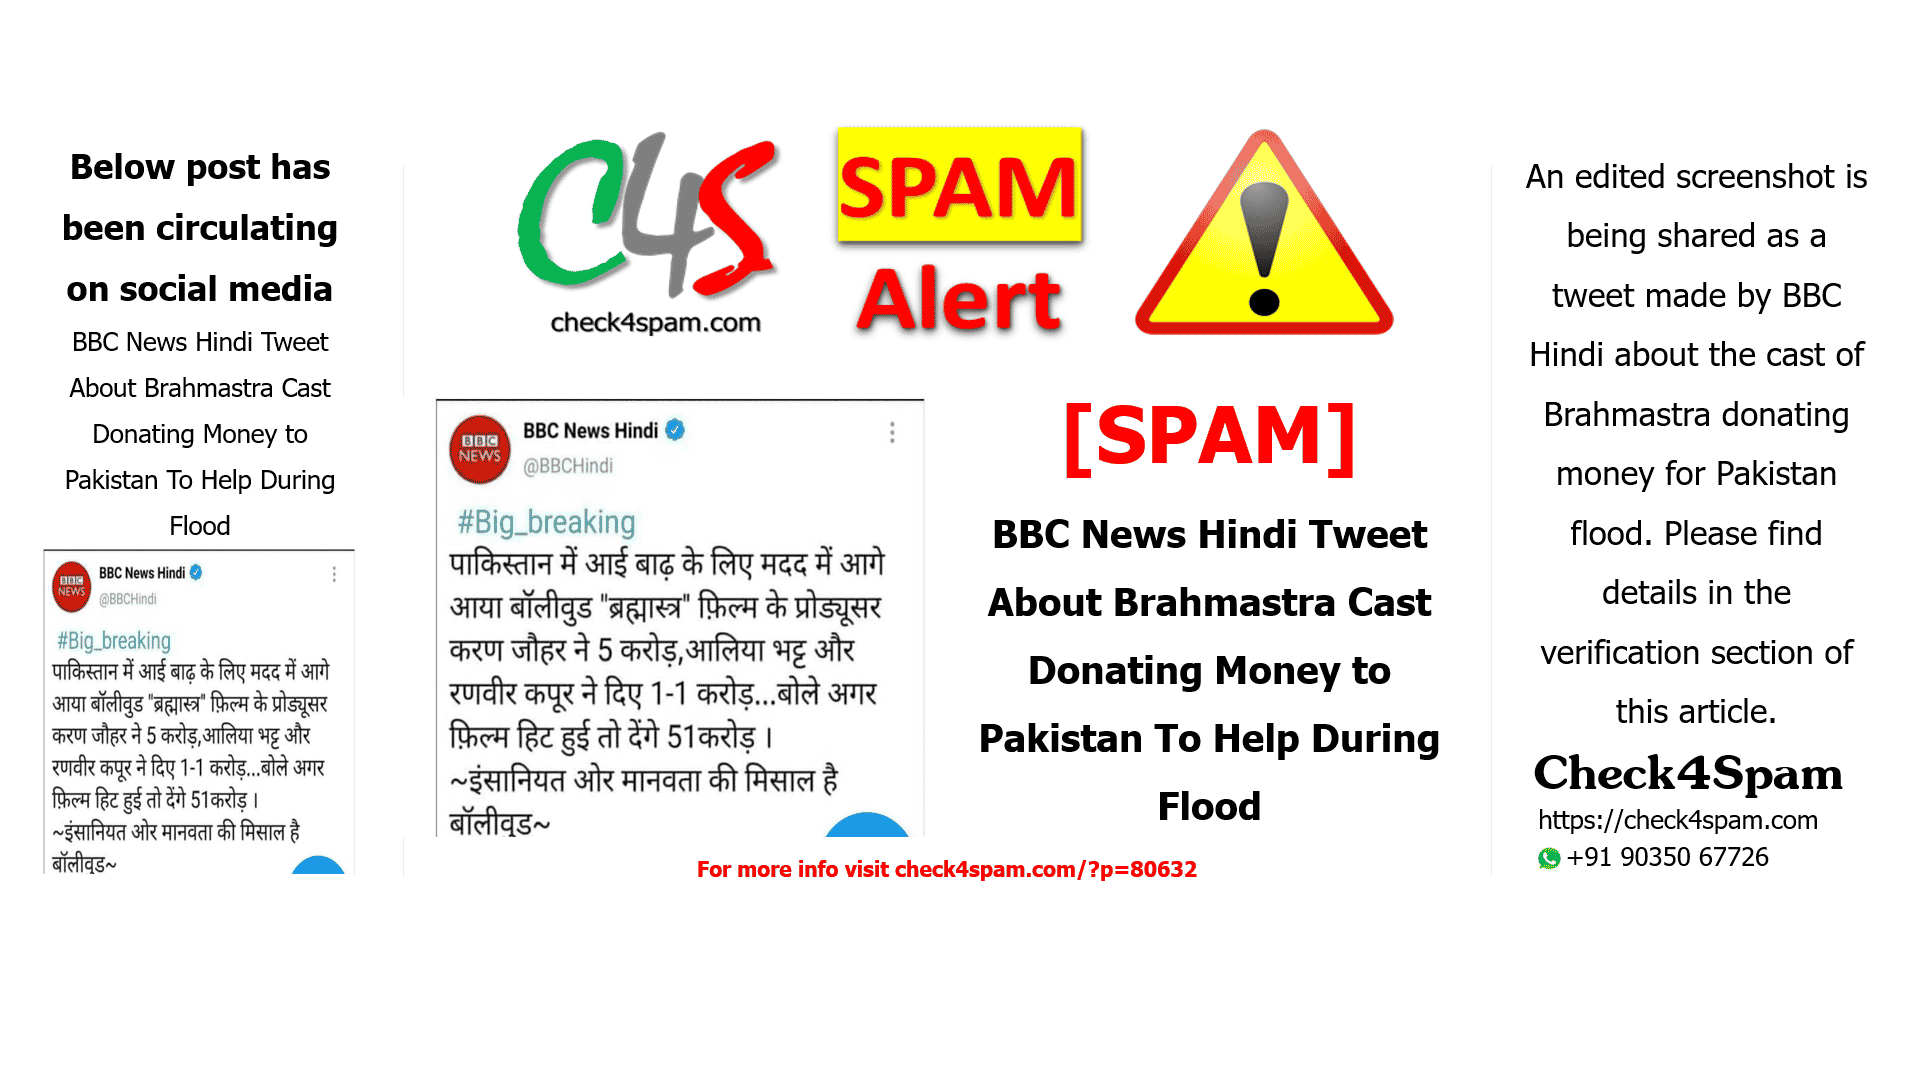 BBC News Hindi Tweet About Brahmastra Cast Donating Money to Pakistan To Help During Flood